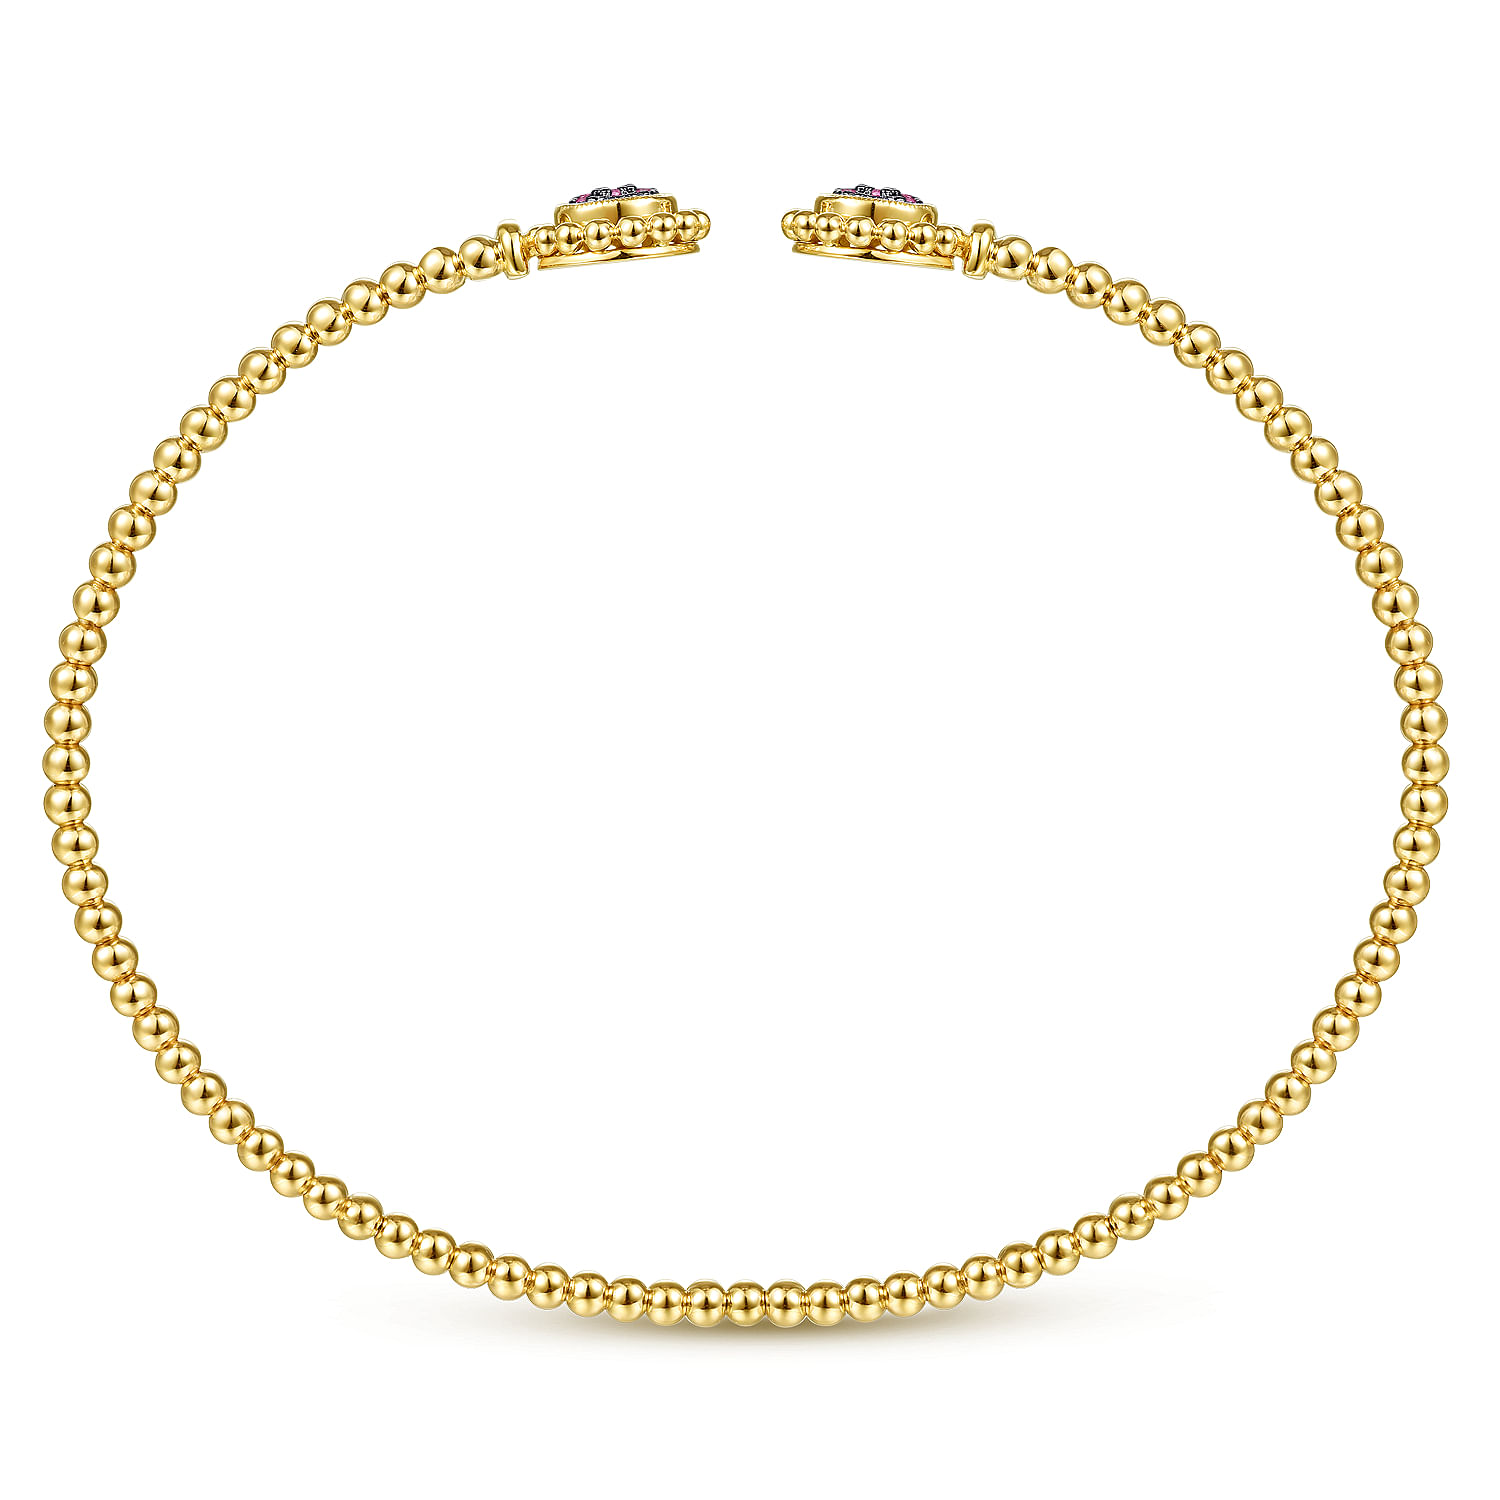 14K Yellow Gold Bujukan Split Cuff Bracelet with Ruby Pavé Flower Caps